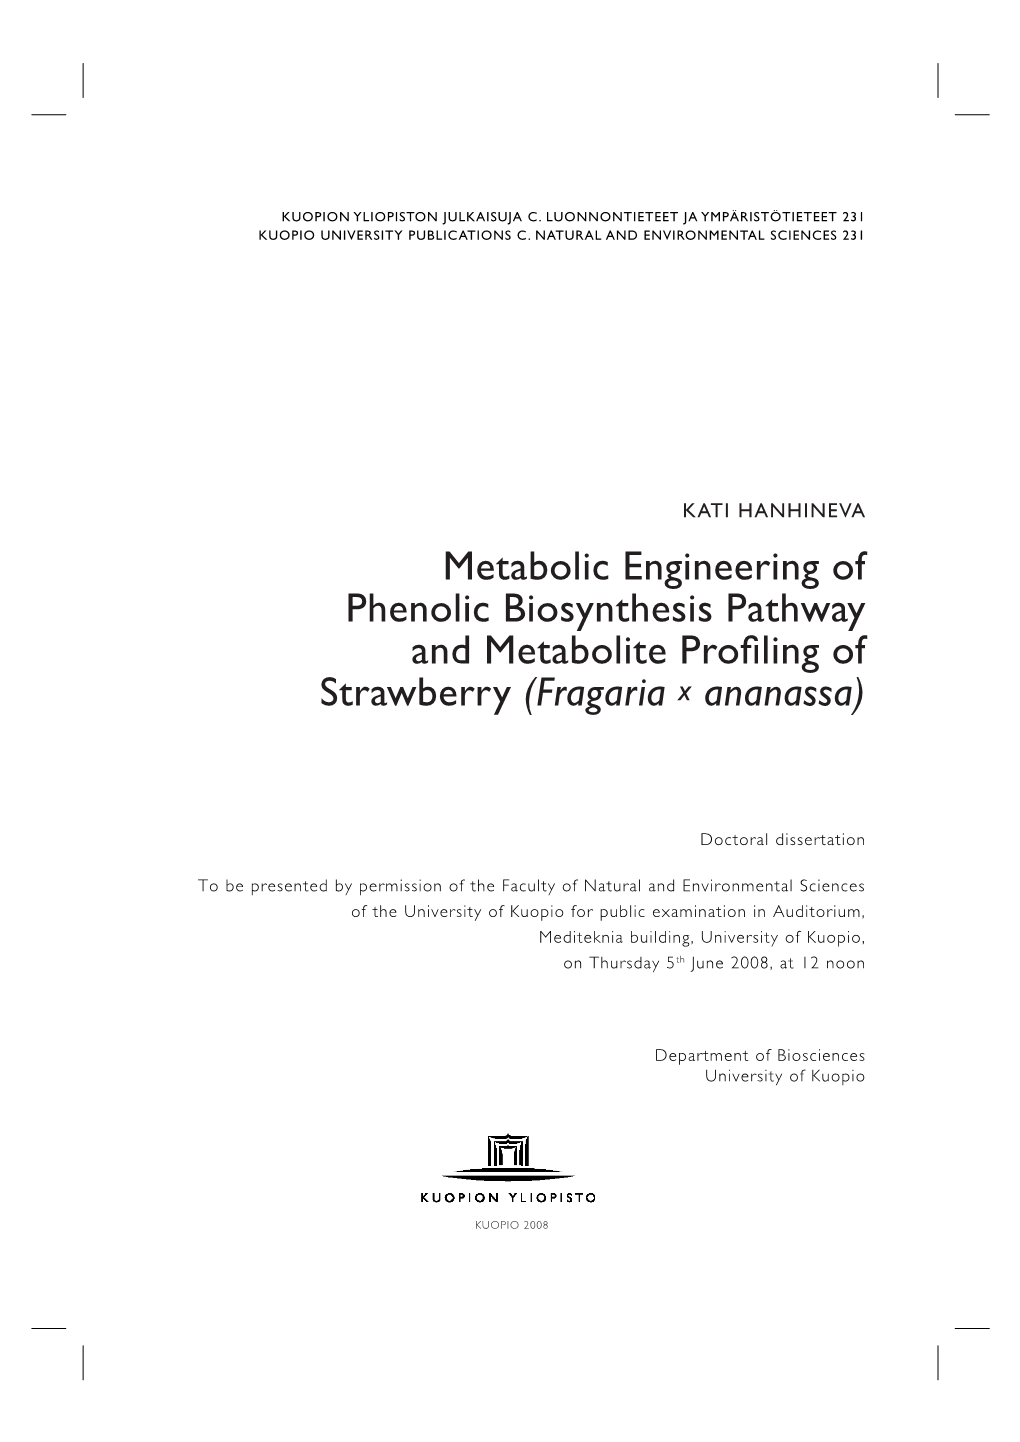 Metabolic Engineering of Phenolic Biosynthesis Pathway and Metabolite Profiling of Strawberry (Fragaria X Ananassa)